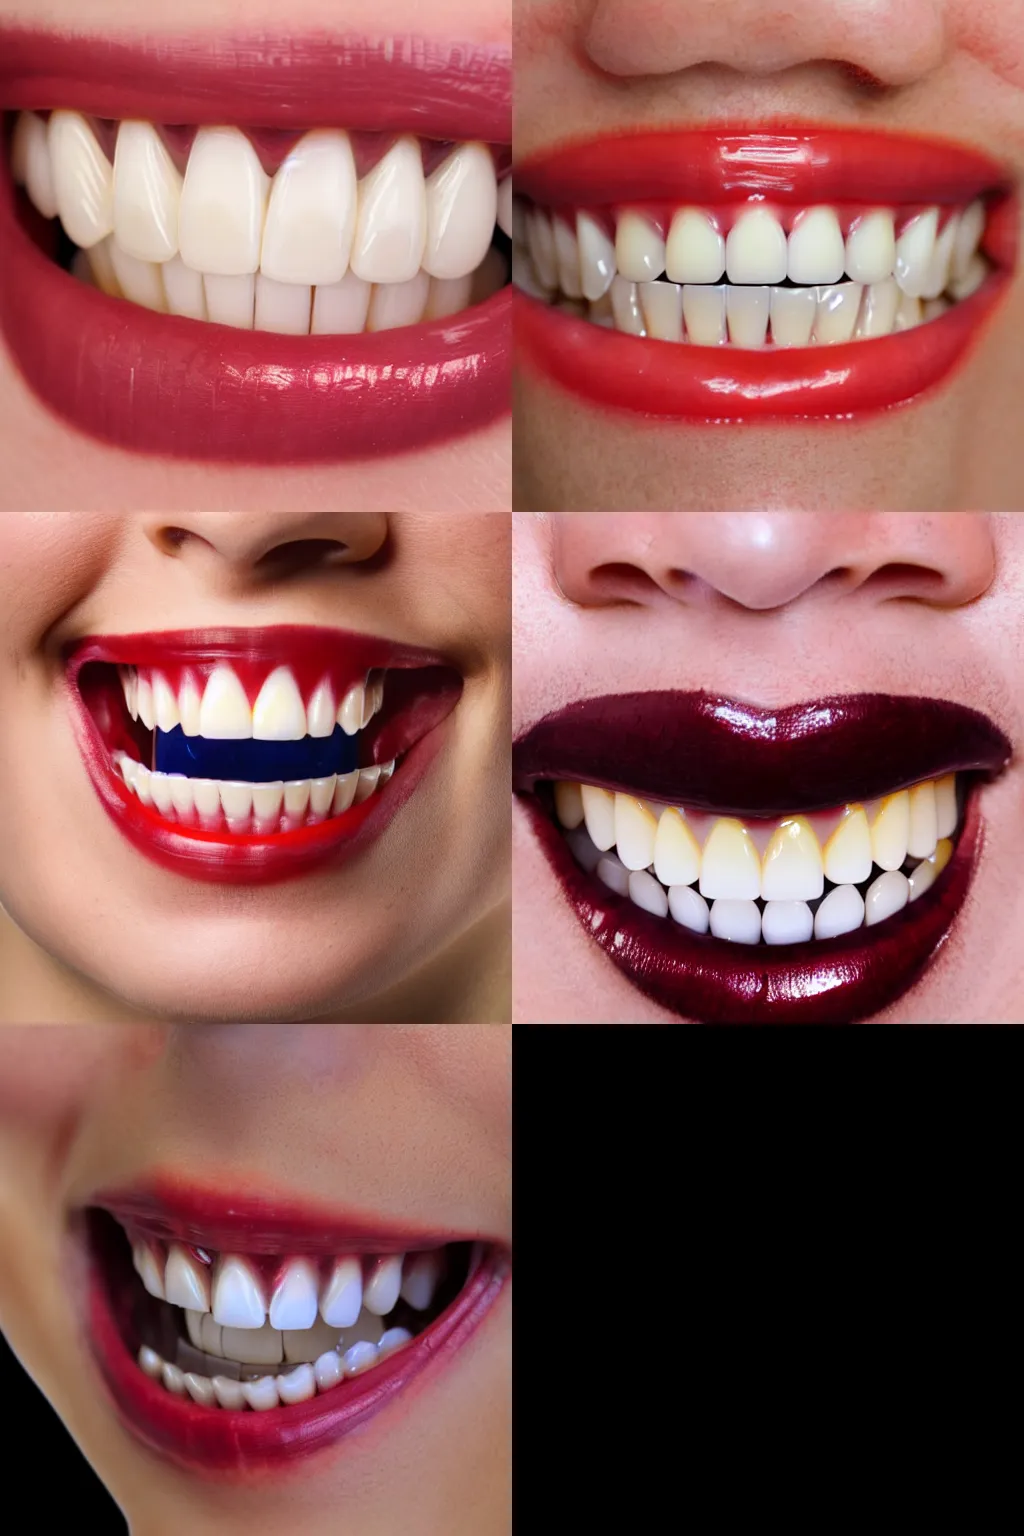 Prompt: Plastic vampire teeth. Product photo.